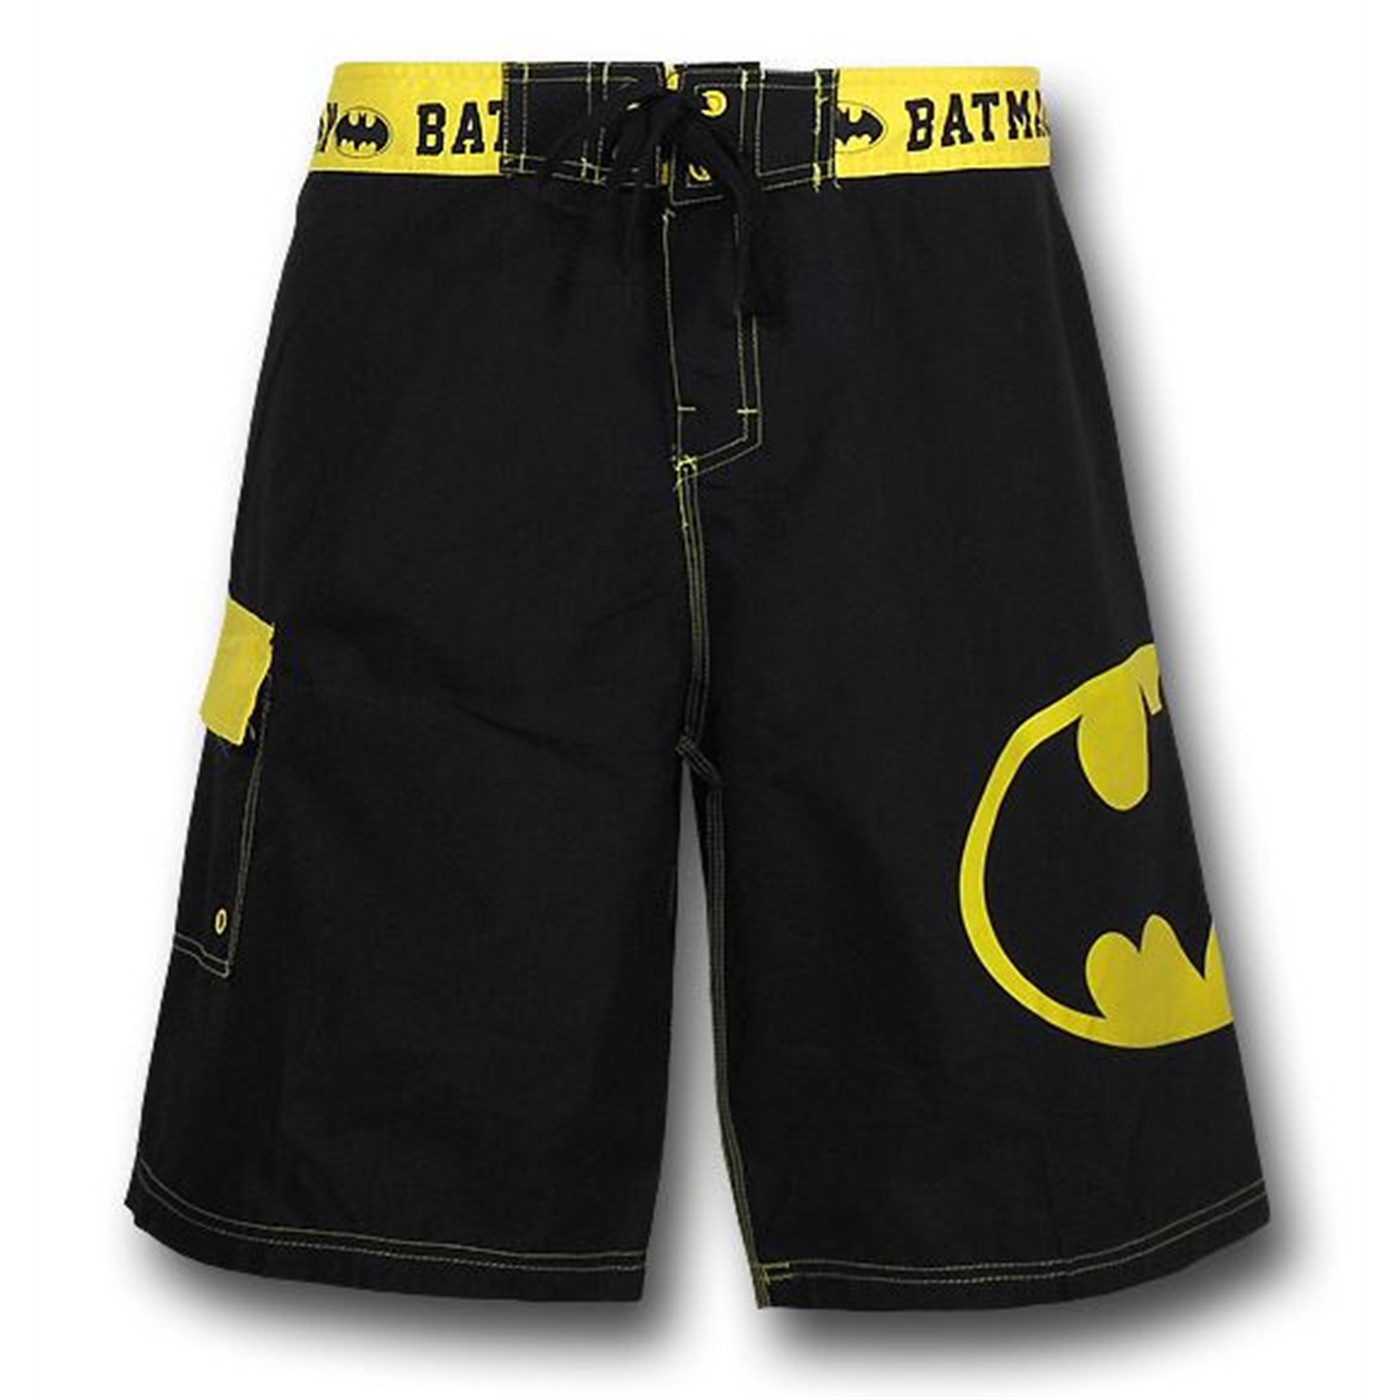 Batman Symbol Black Board Shorts